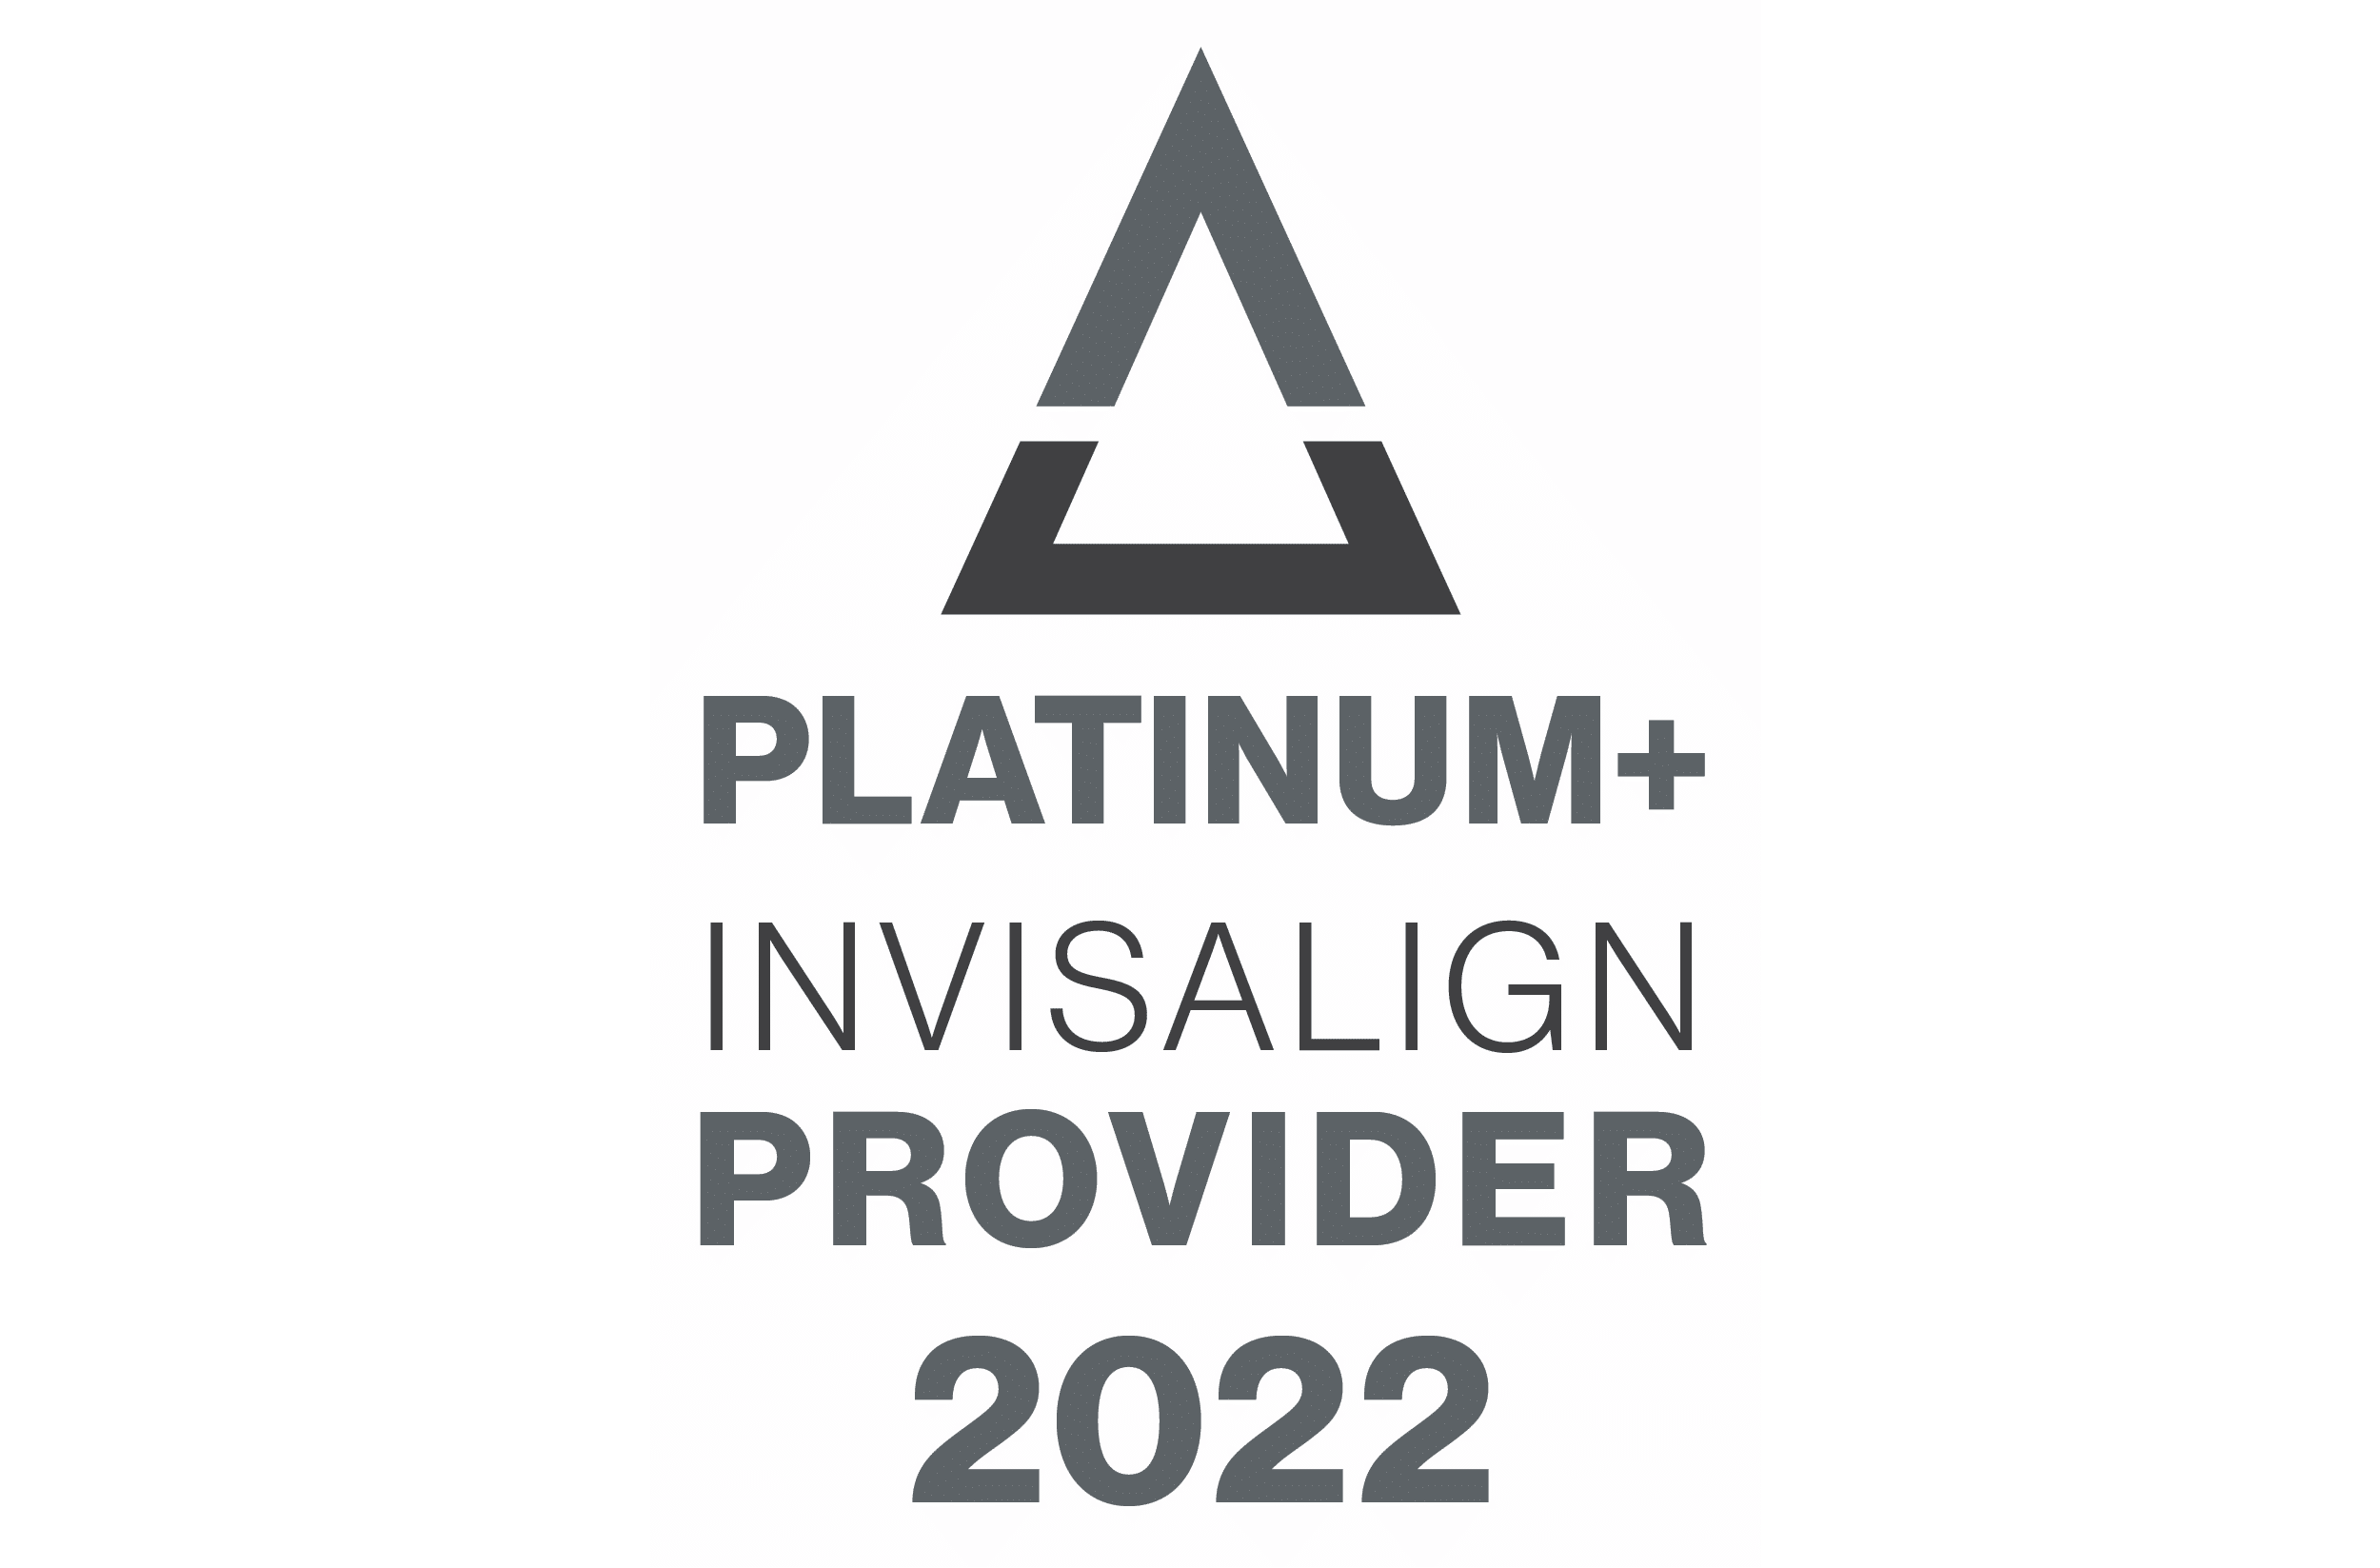 Jt Orthodontics is a Platinum+ Invisalign Provider 2022